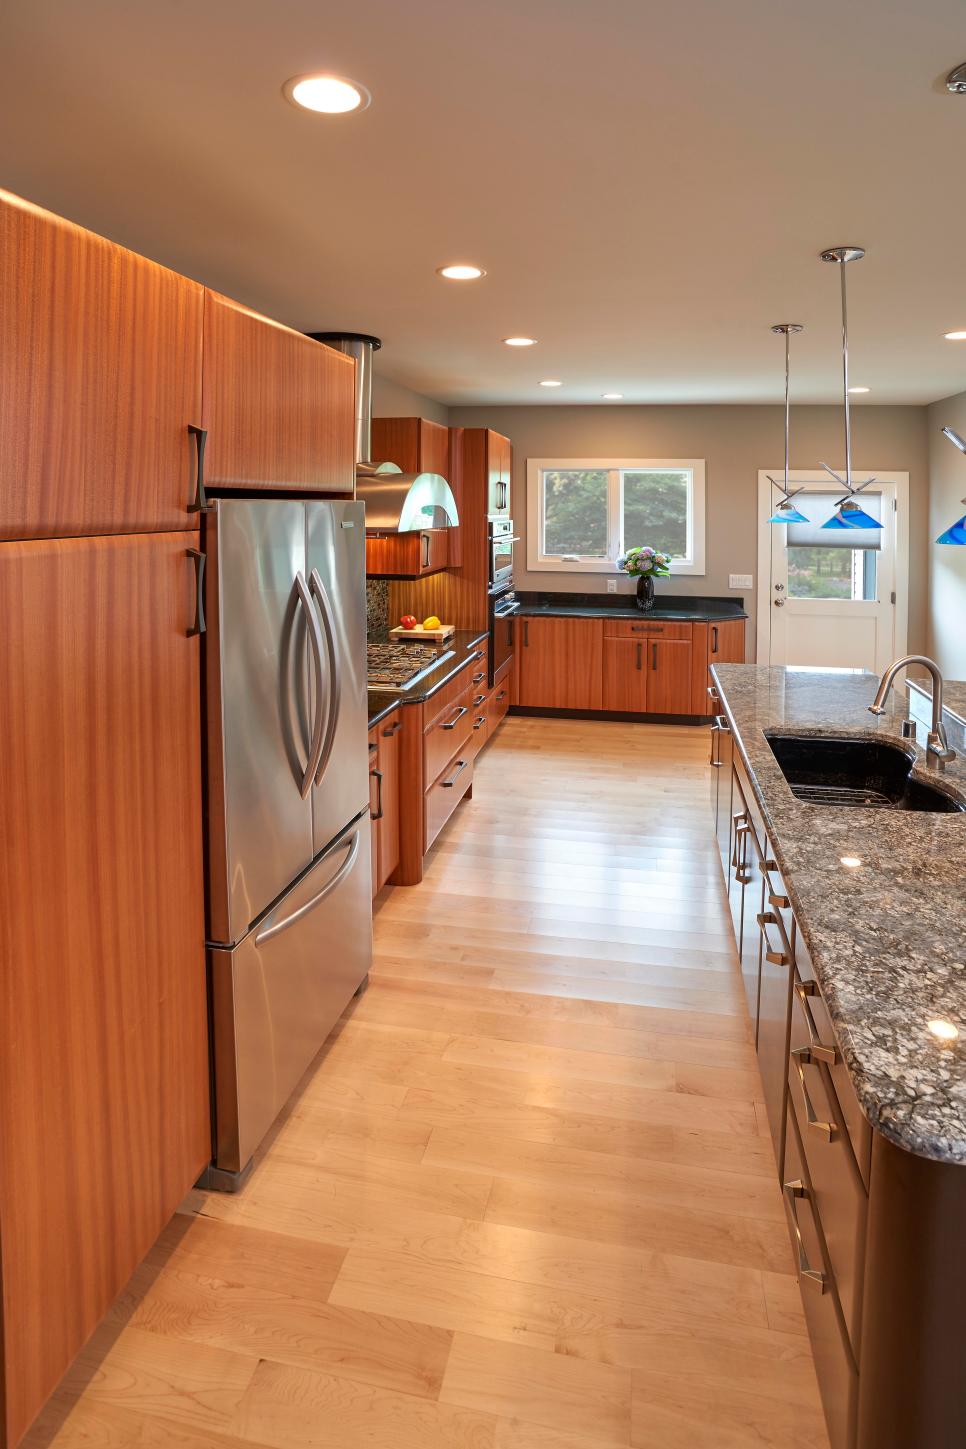 Kitchen Design Trend: Wood Floors | HGTV